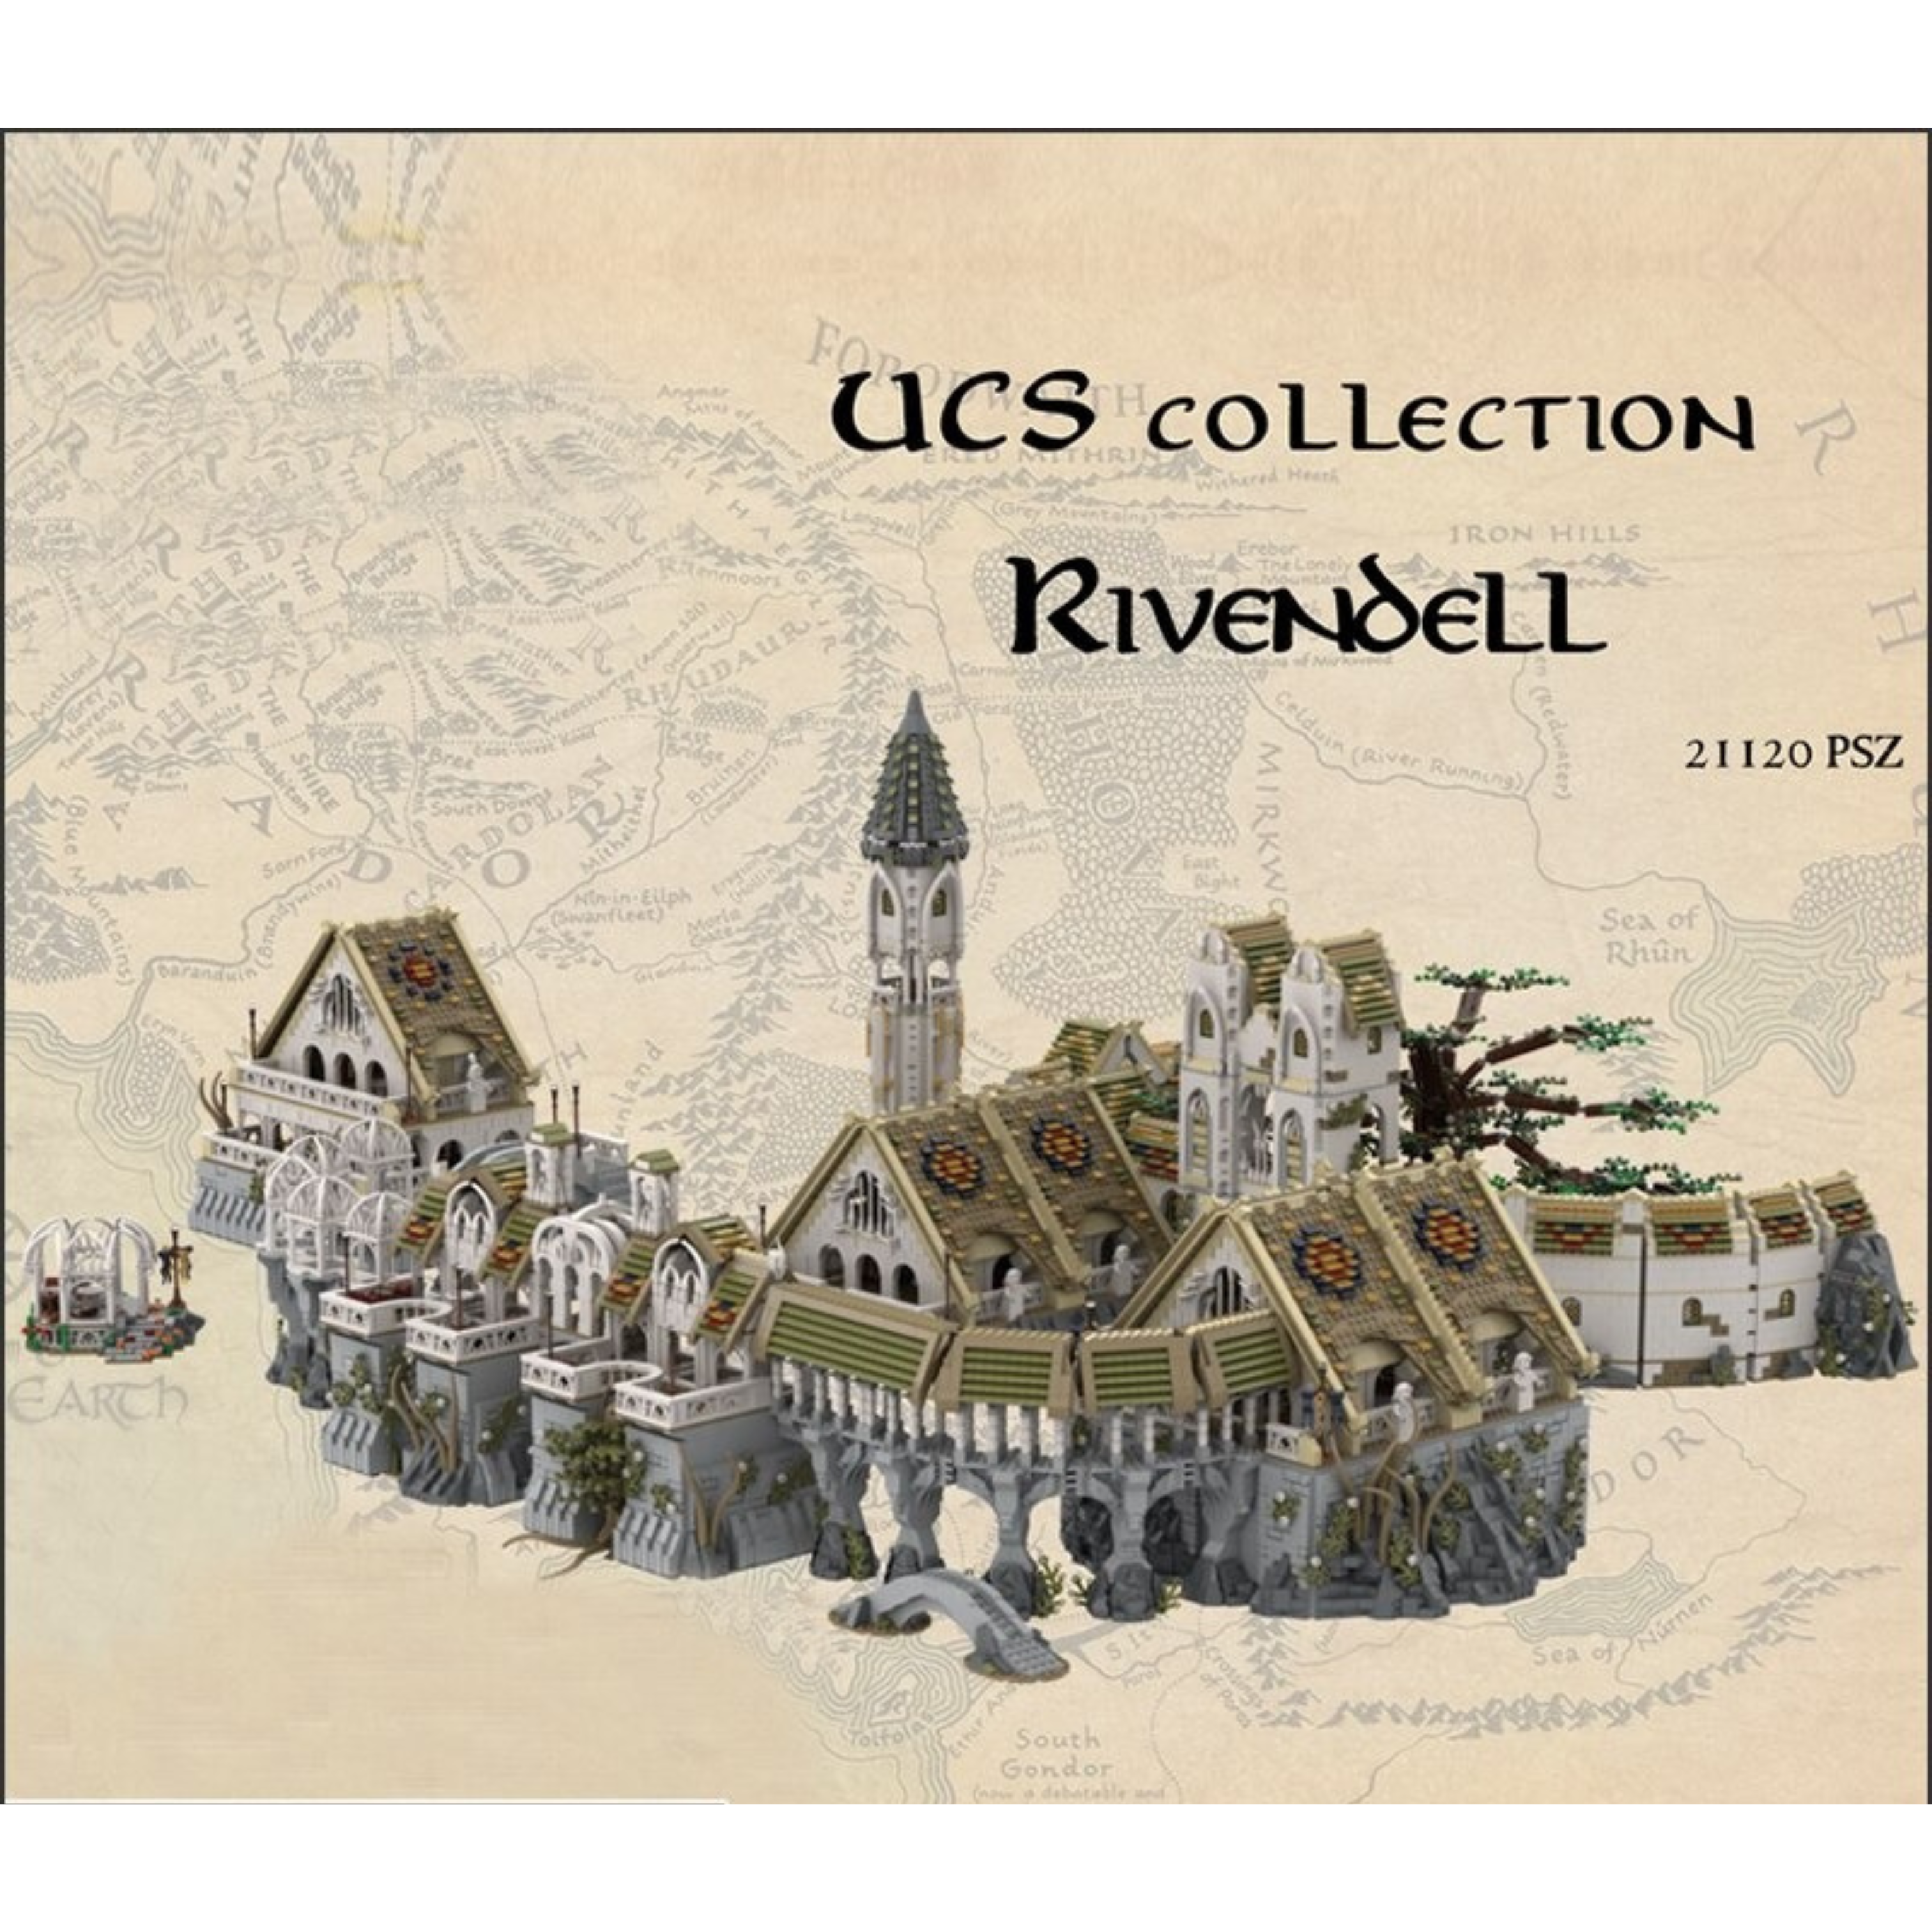 UCS Rivendell - Complete Bundle MOC-62284 Modular Building With 21067 Pieces